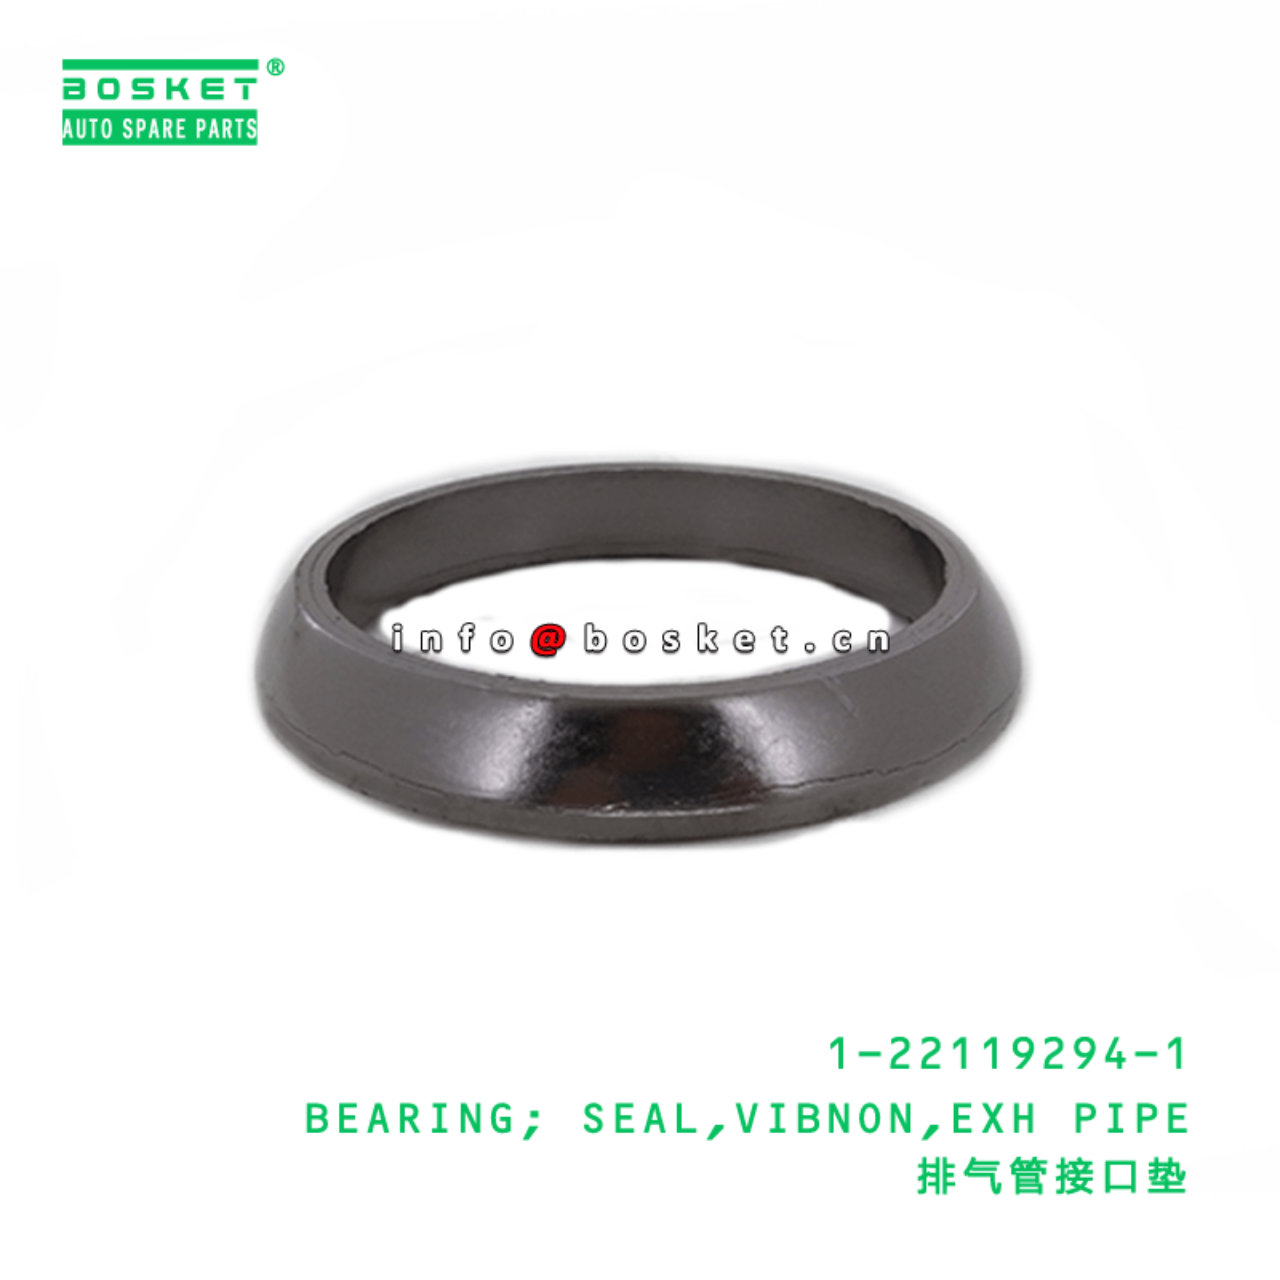  1-22119294-1 Exhaust Pipe Vibnon Seal Bearing 1221192941 Suitable for ISUZU CXZ81 10PE1